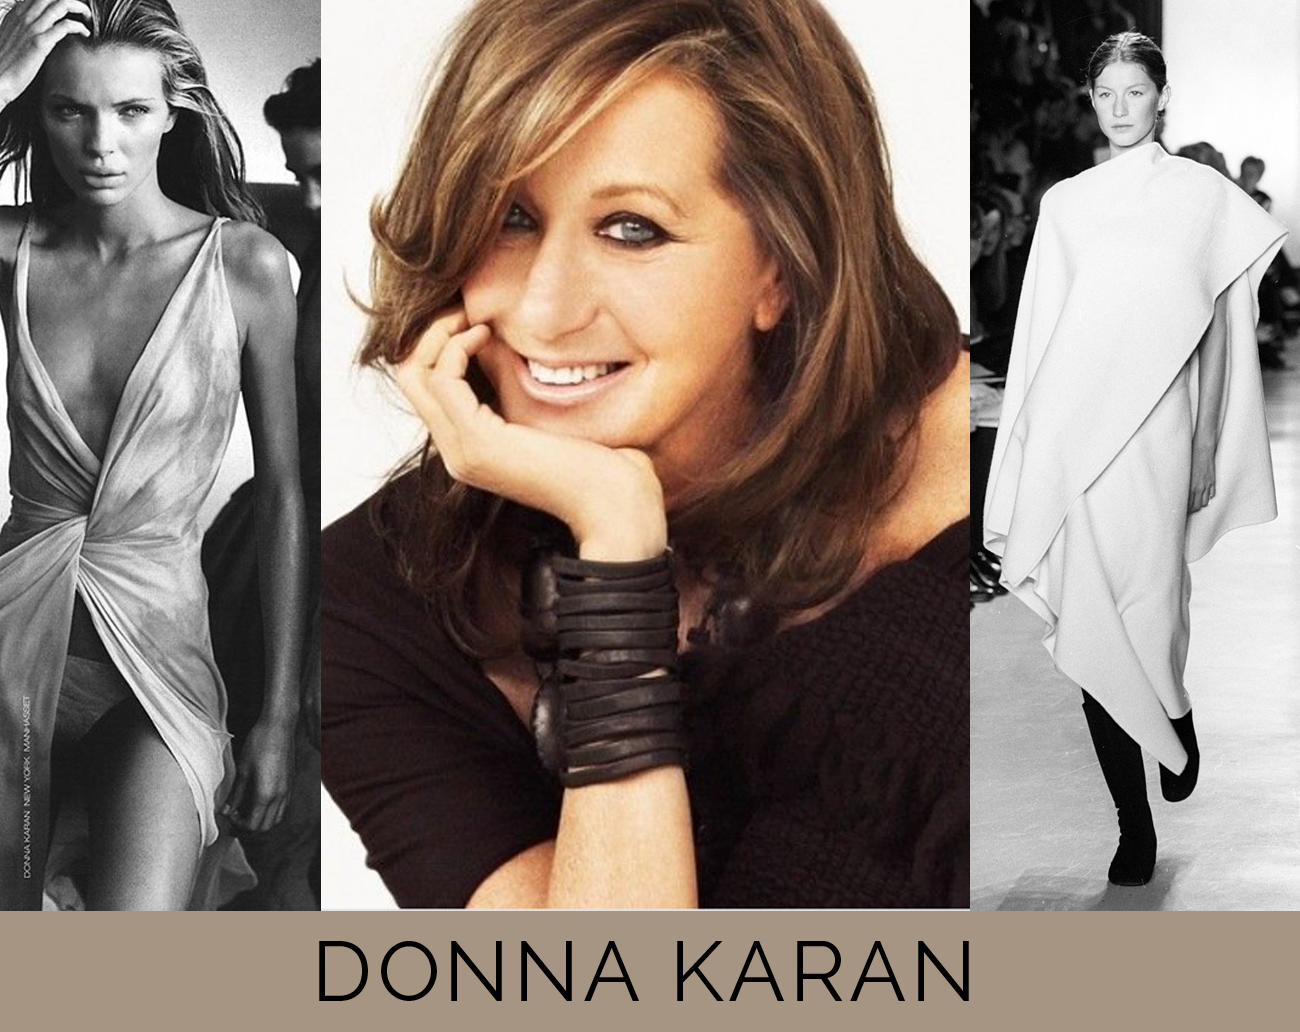 Donna Karan no longer head designer at Donna Karan International